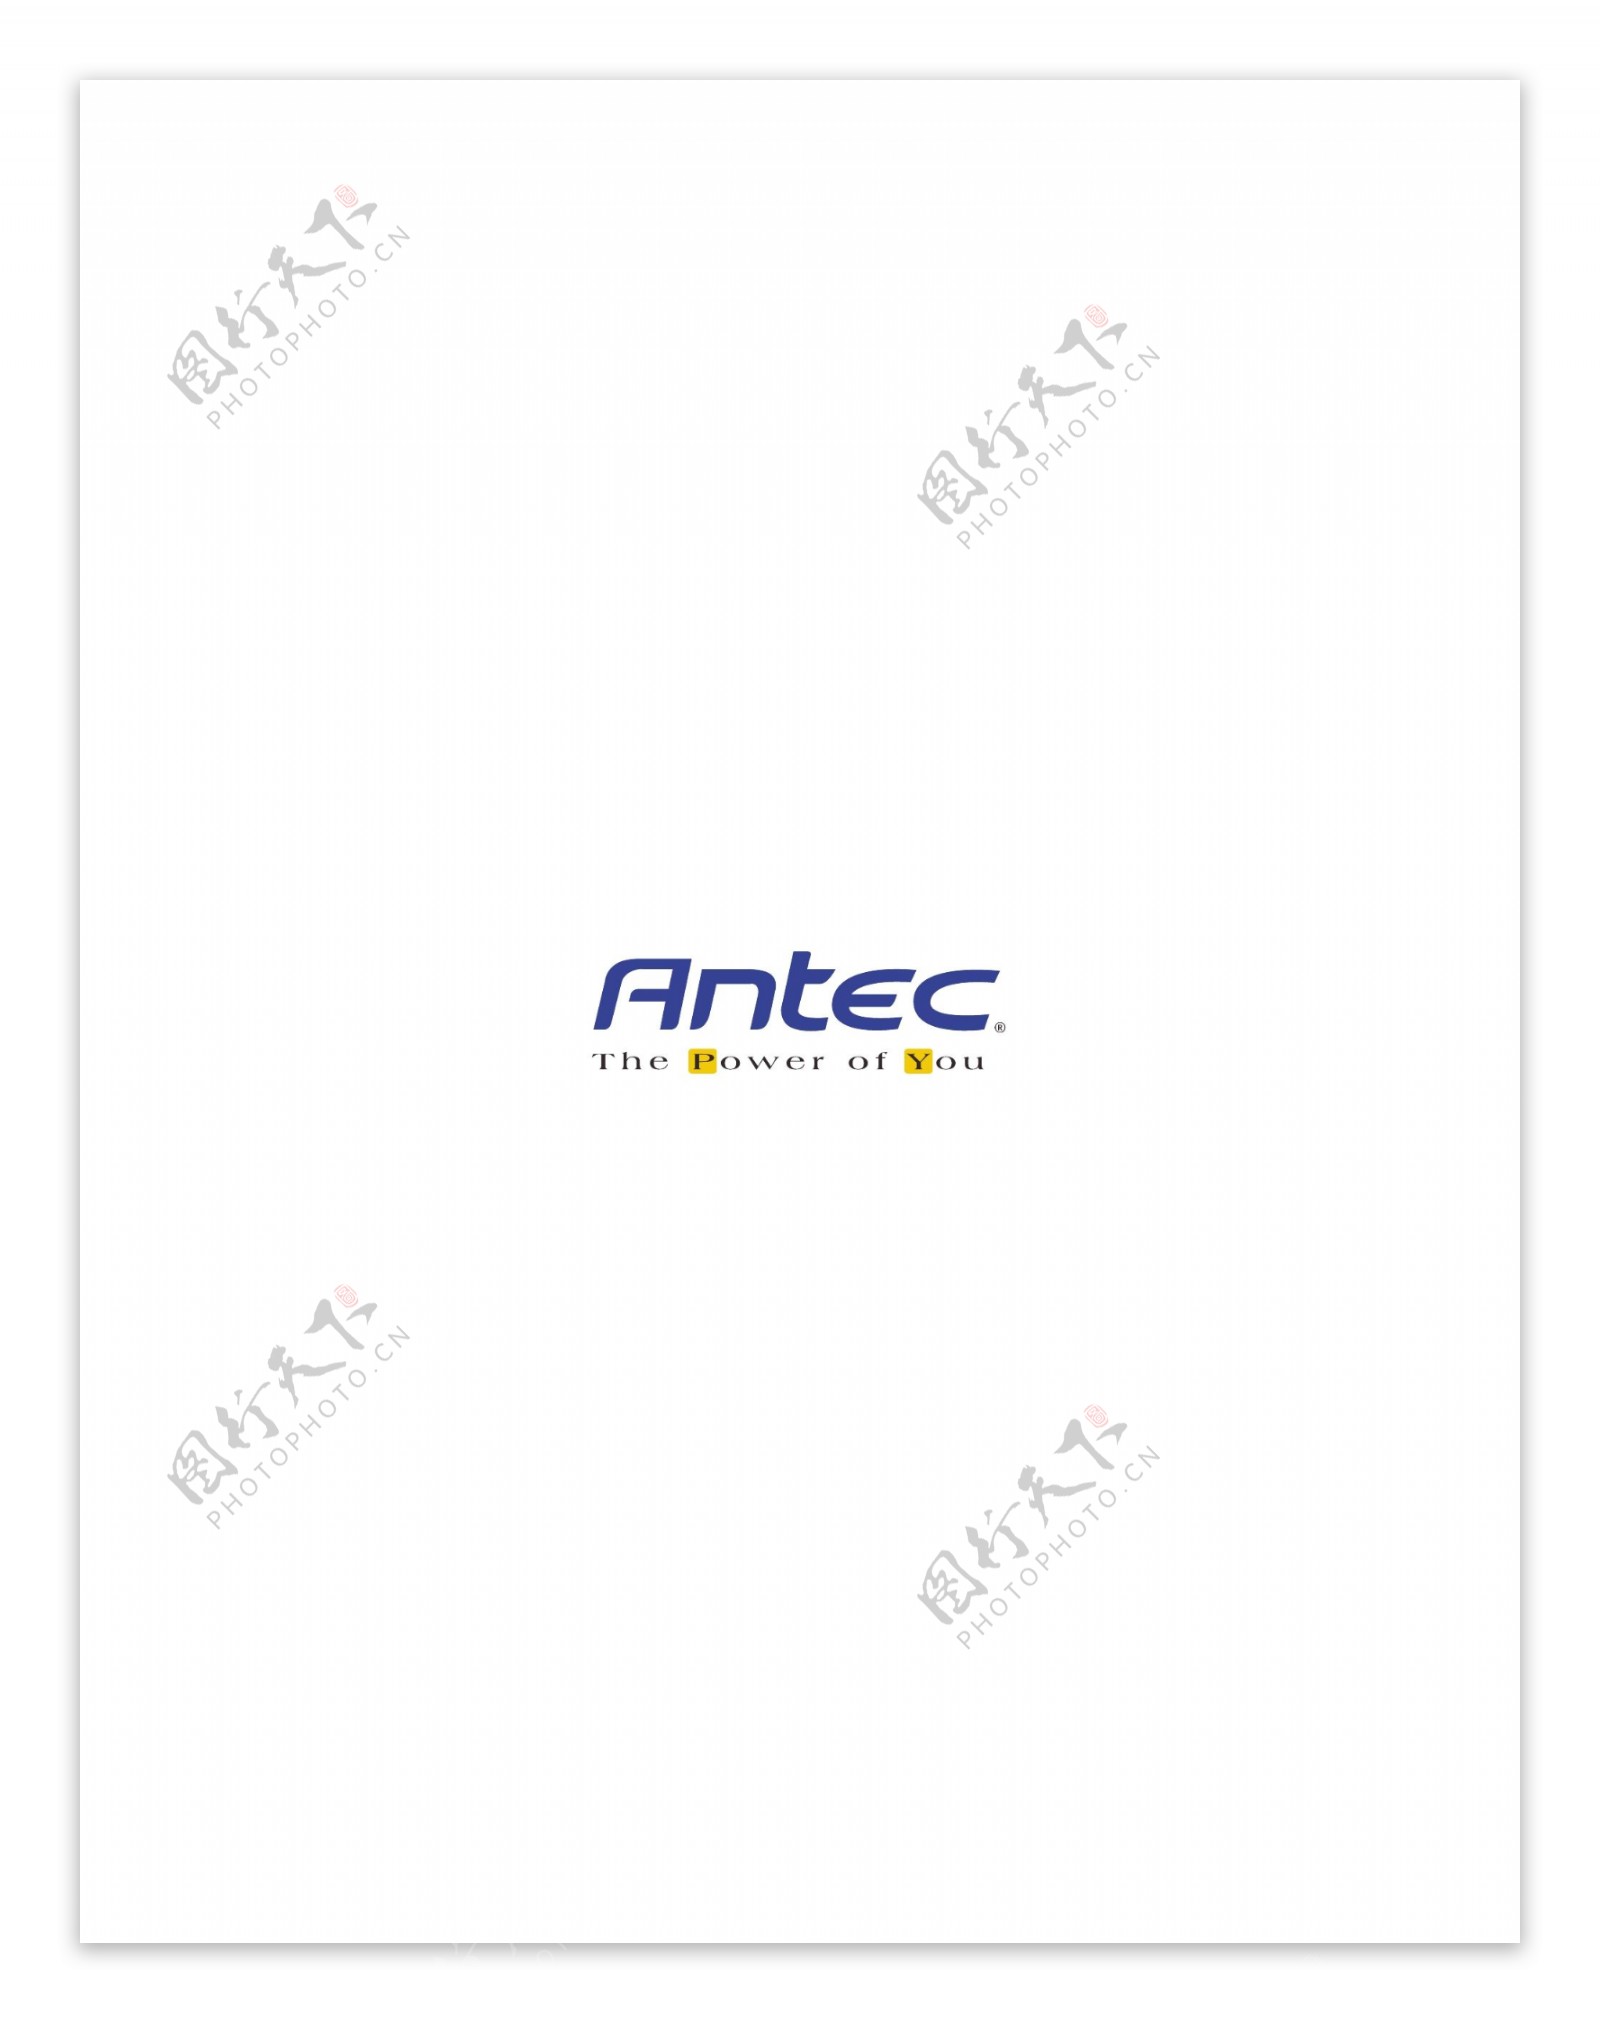 Anteclogo设计欣赏Antec电脑硬件标志下载标志设计欣赏